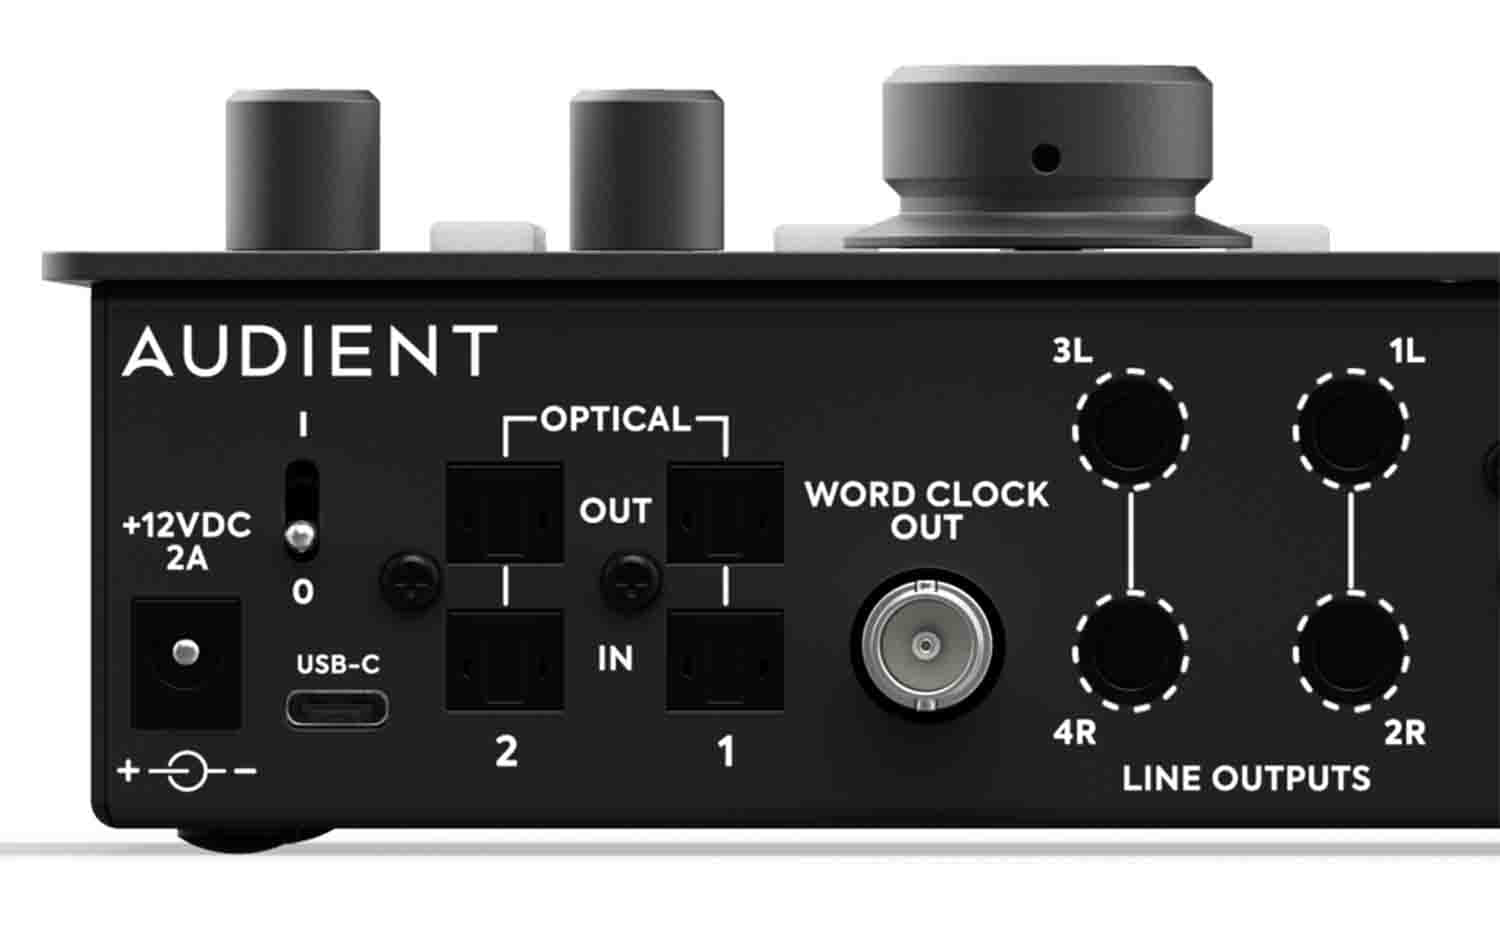 Audient iD44 MKII USB Audio Interface